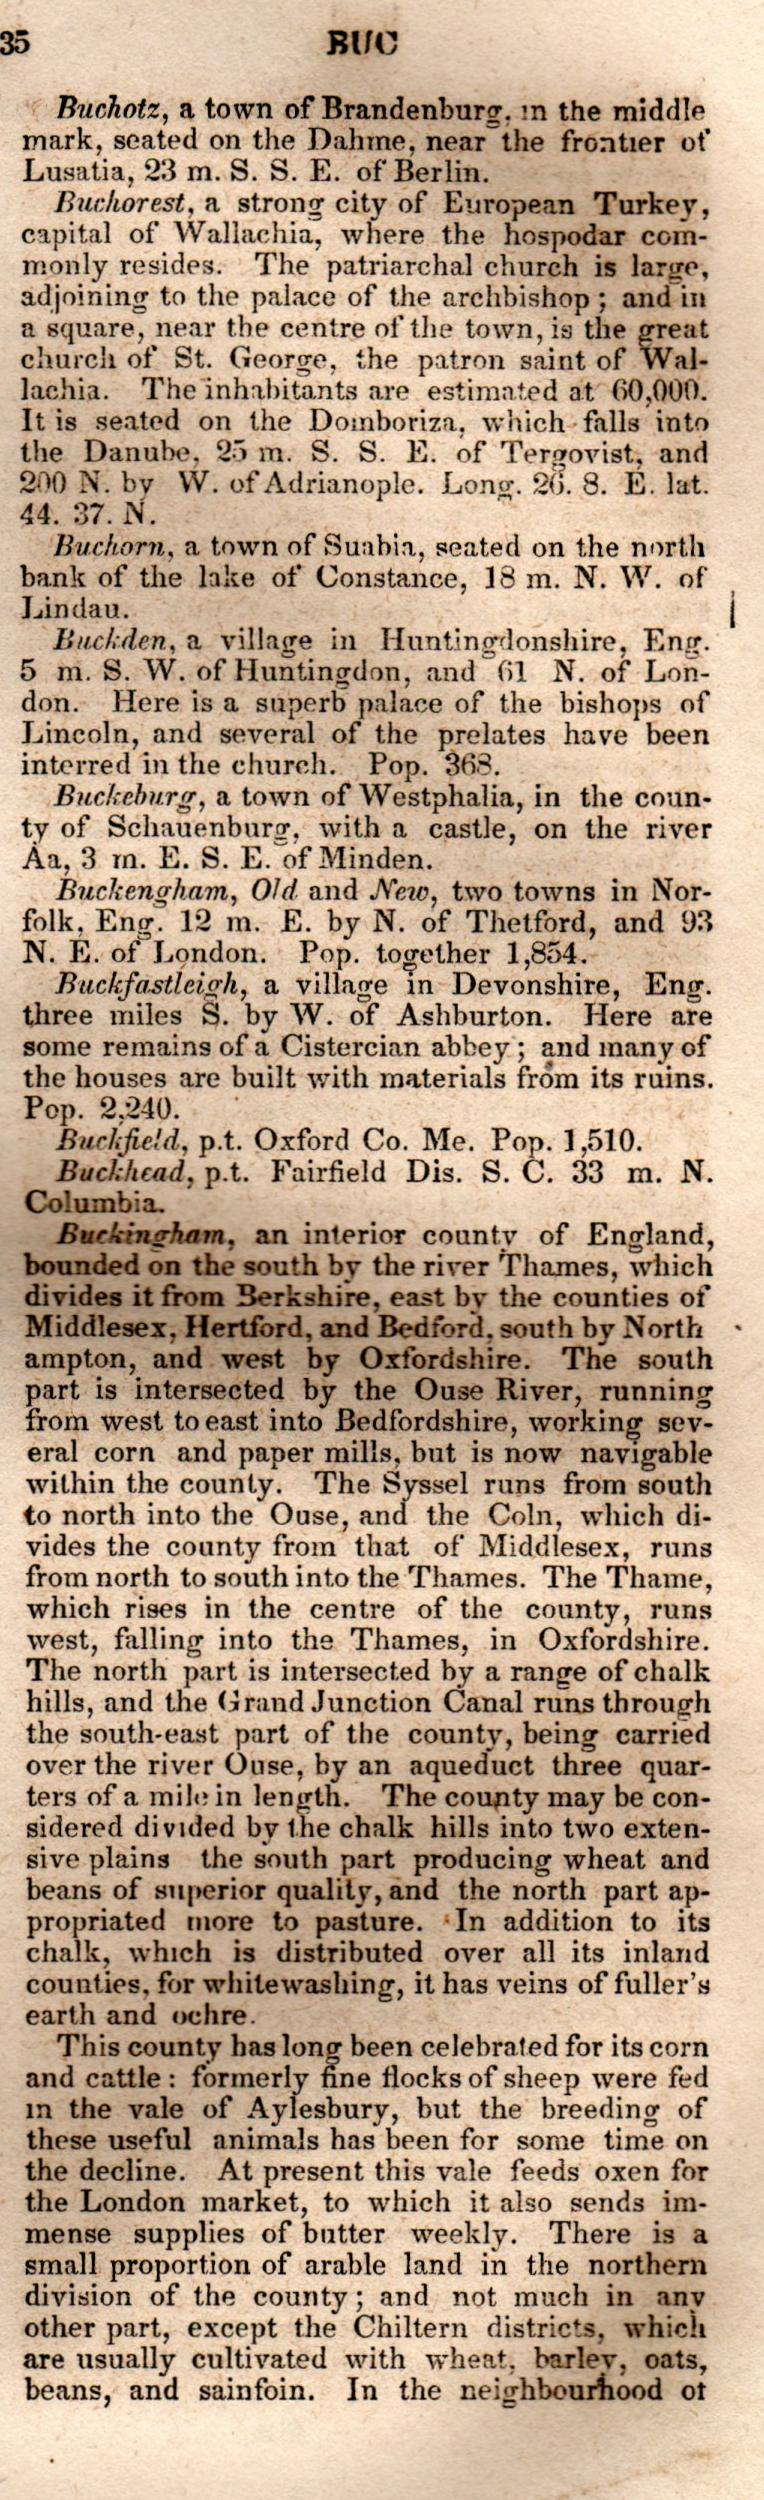 Brookes’ Universal Gazetteer (1850), Page 135 Right Column